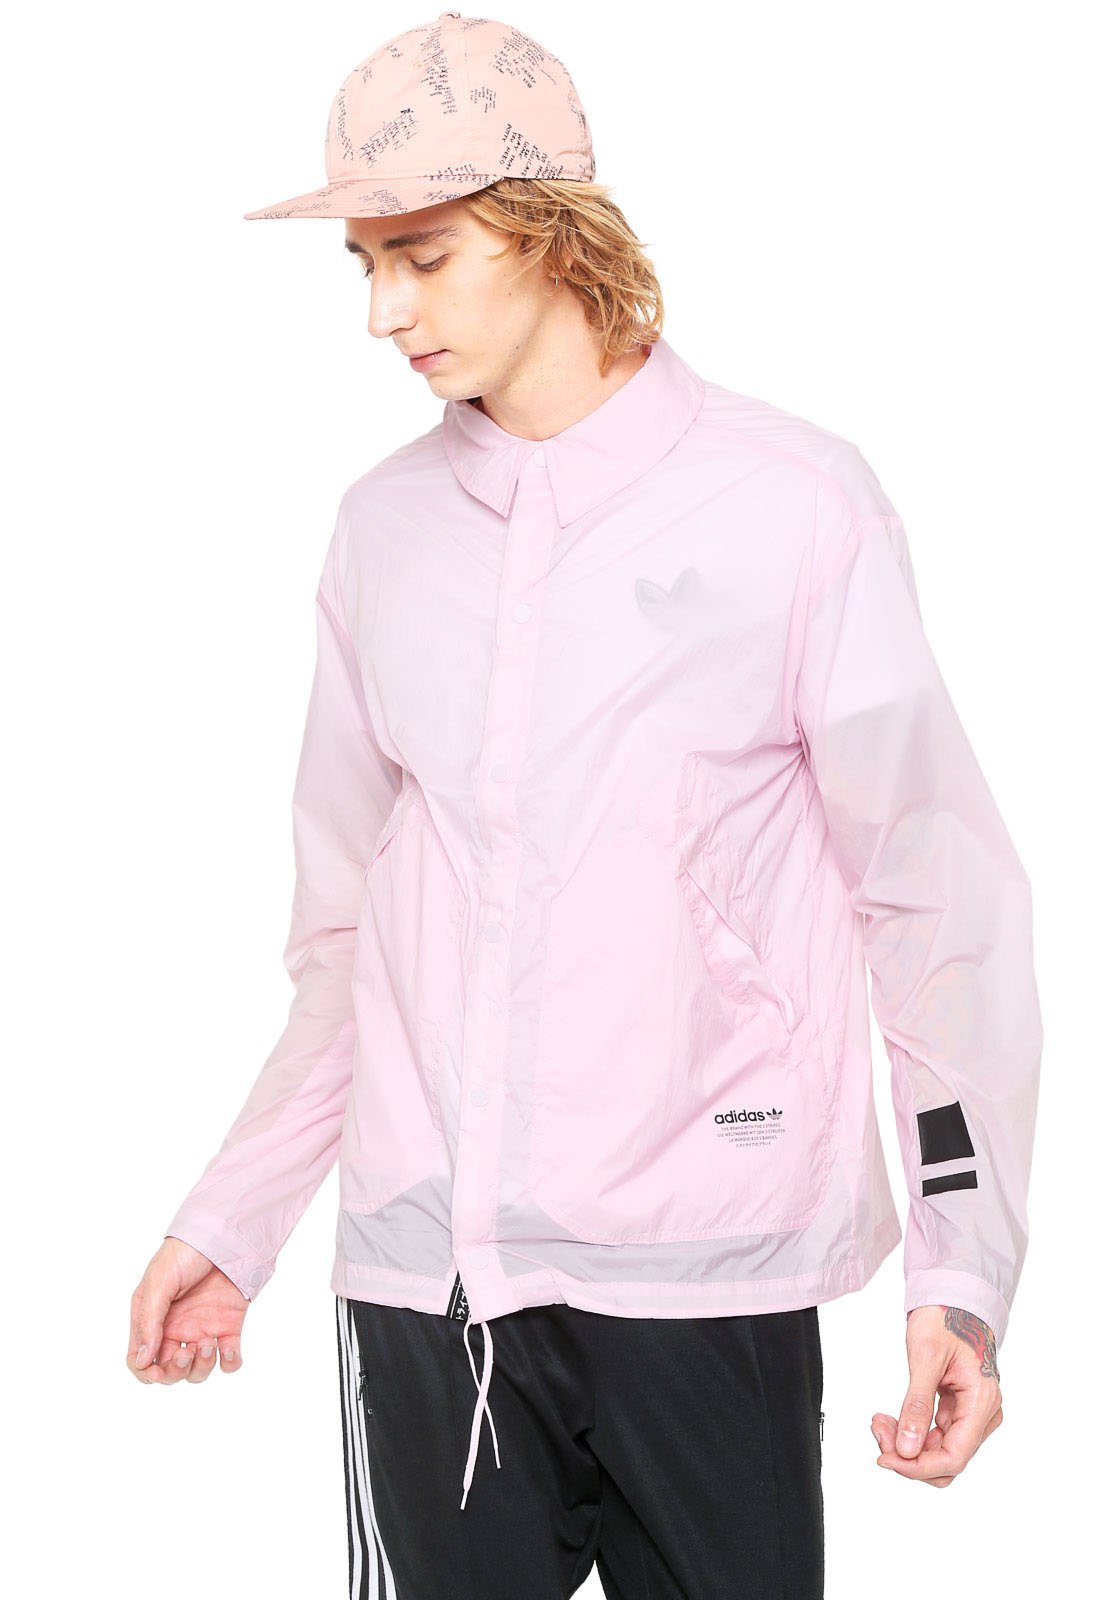 jaqueta nylon masculina adidas